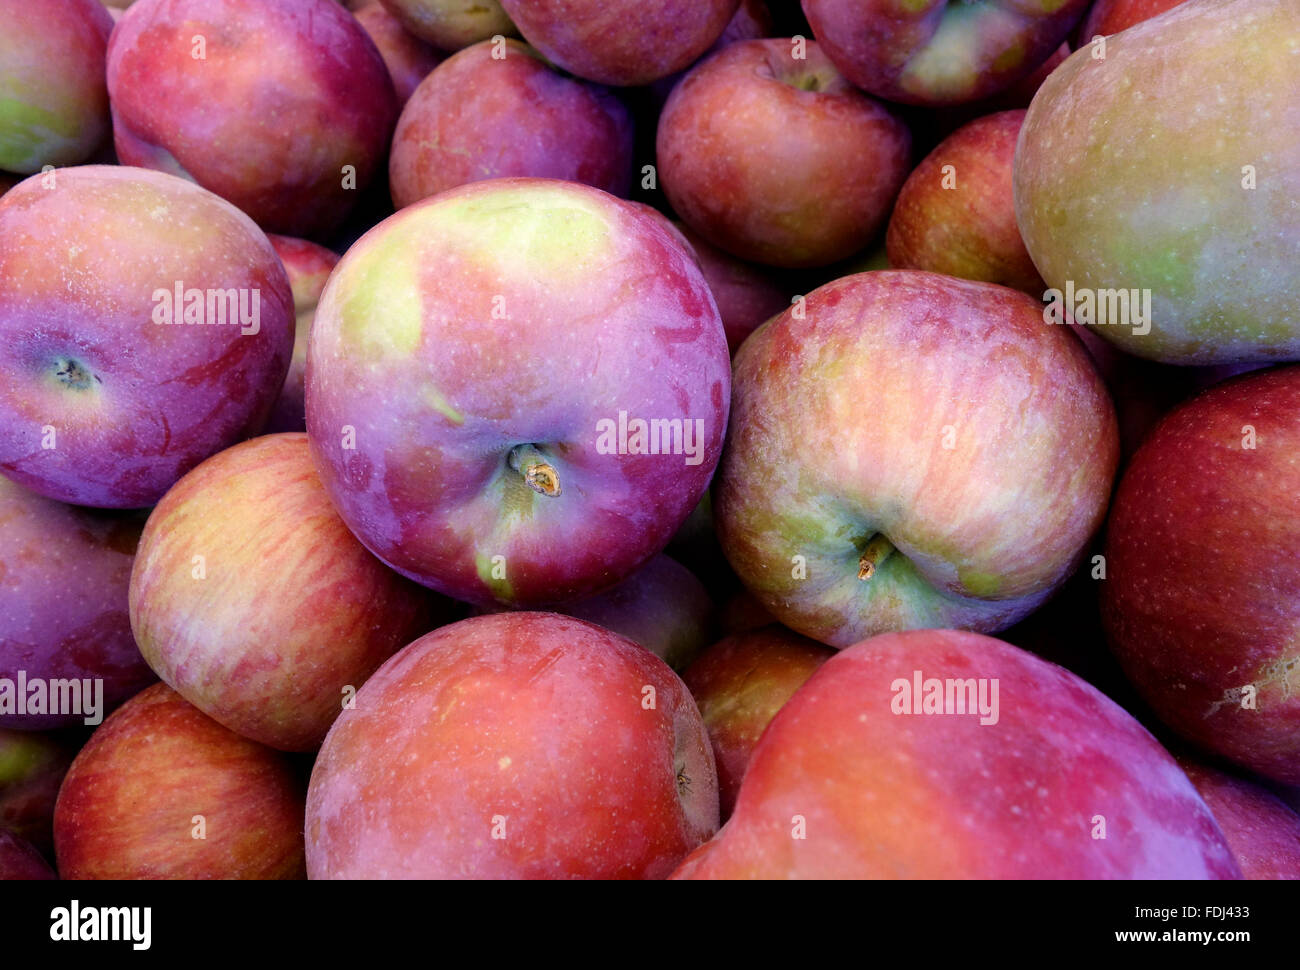 https://c8.alamy.com/comp/FDJ433/fresh-red-macintosh-apples-FDJ433.jpg